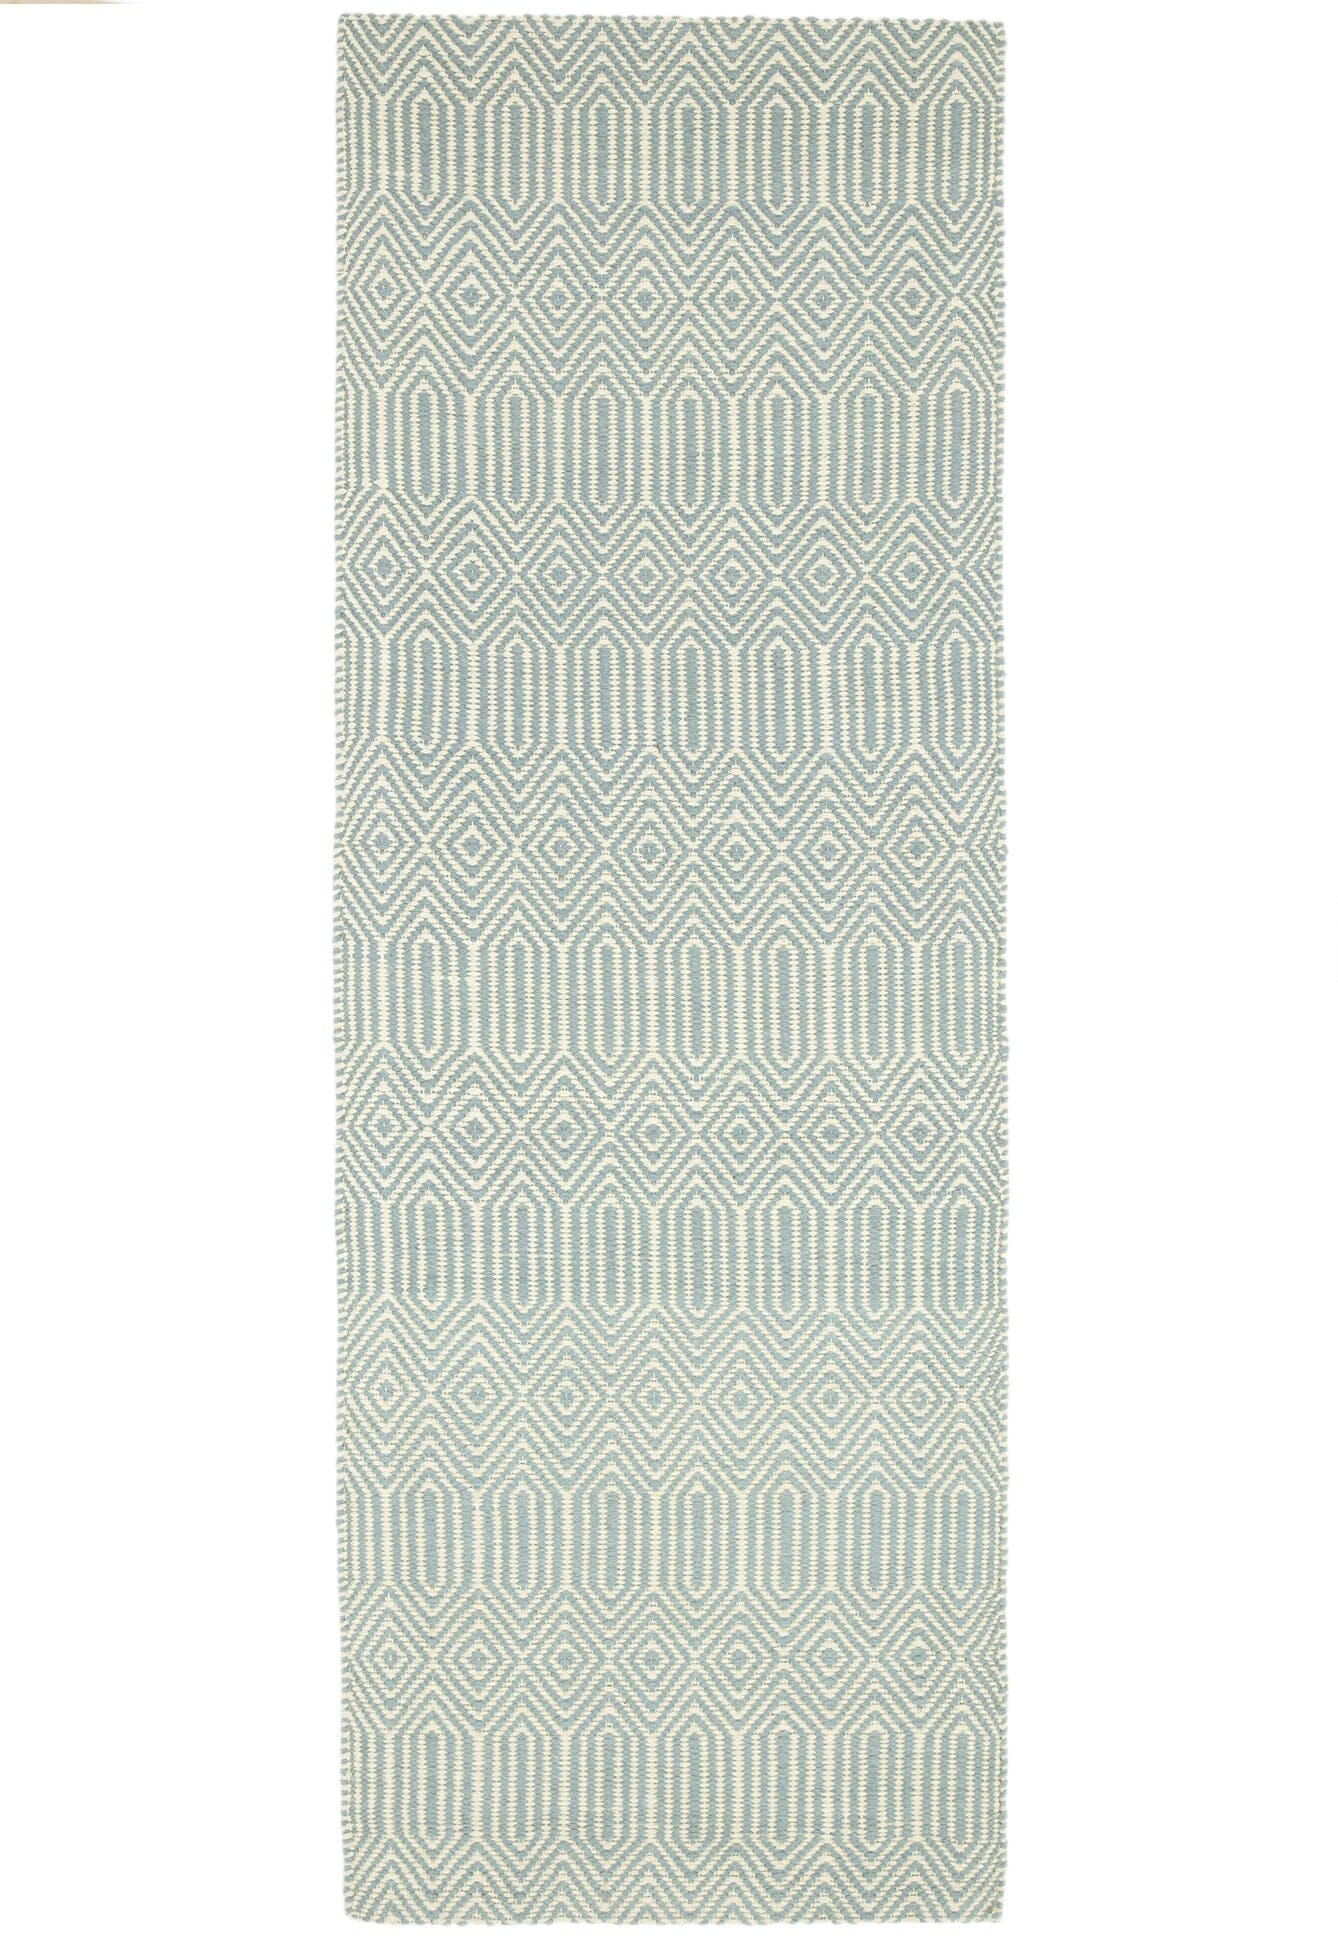  Asiatic Carpets-Asiatic Carpets Sloan Hand Woven Rug Duck Egg - 200 x 300cm-Blue 189 